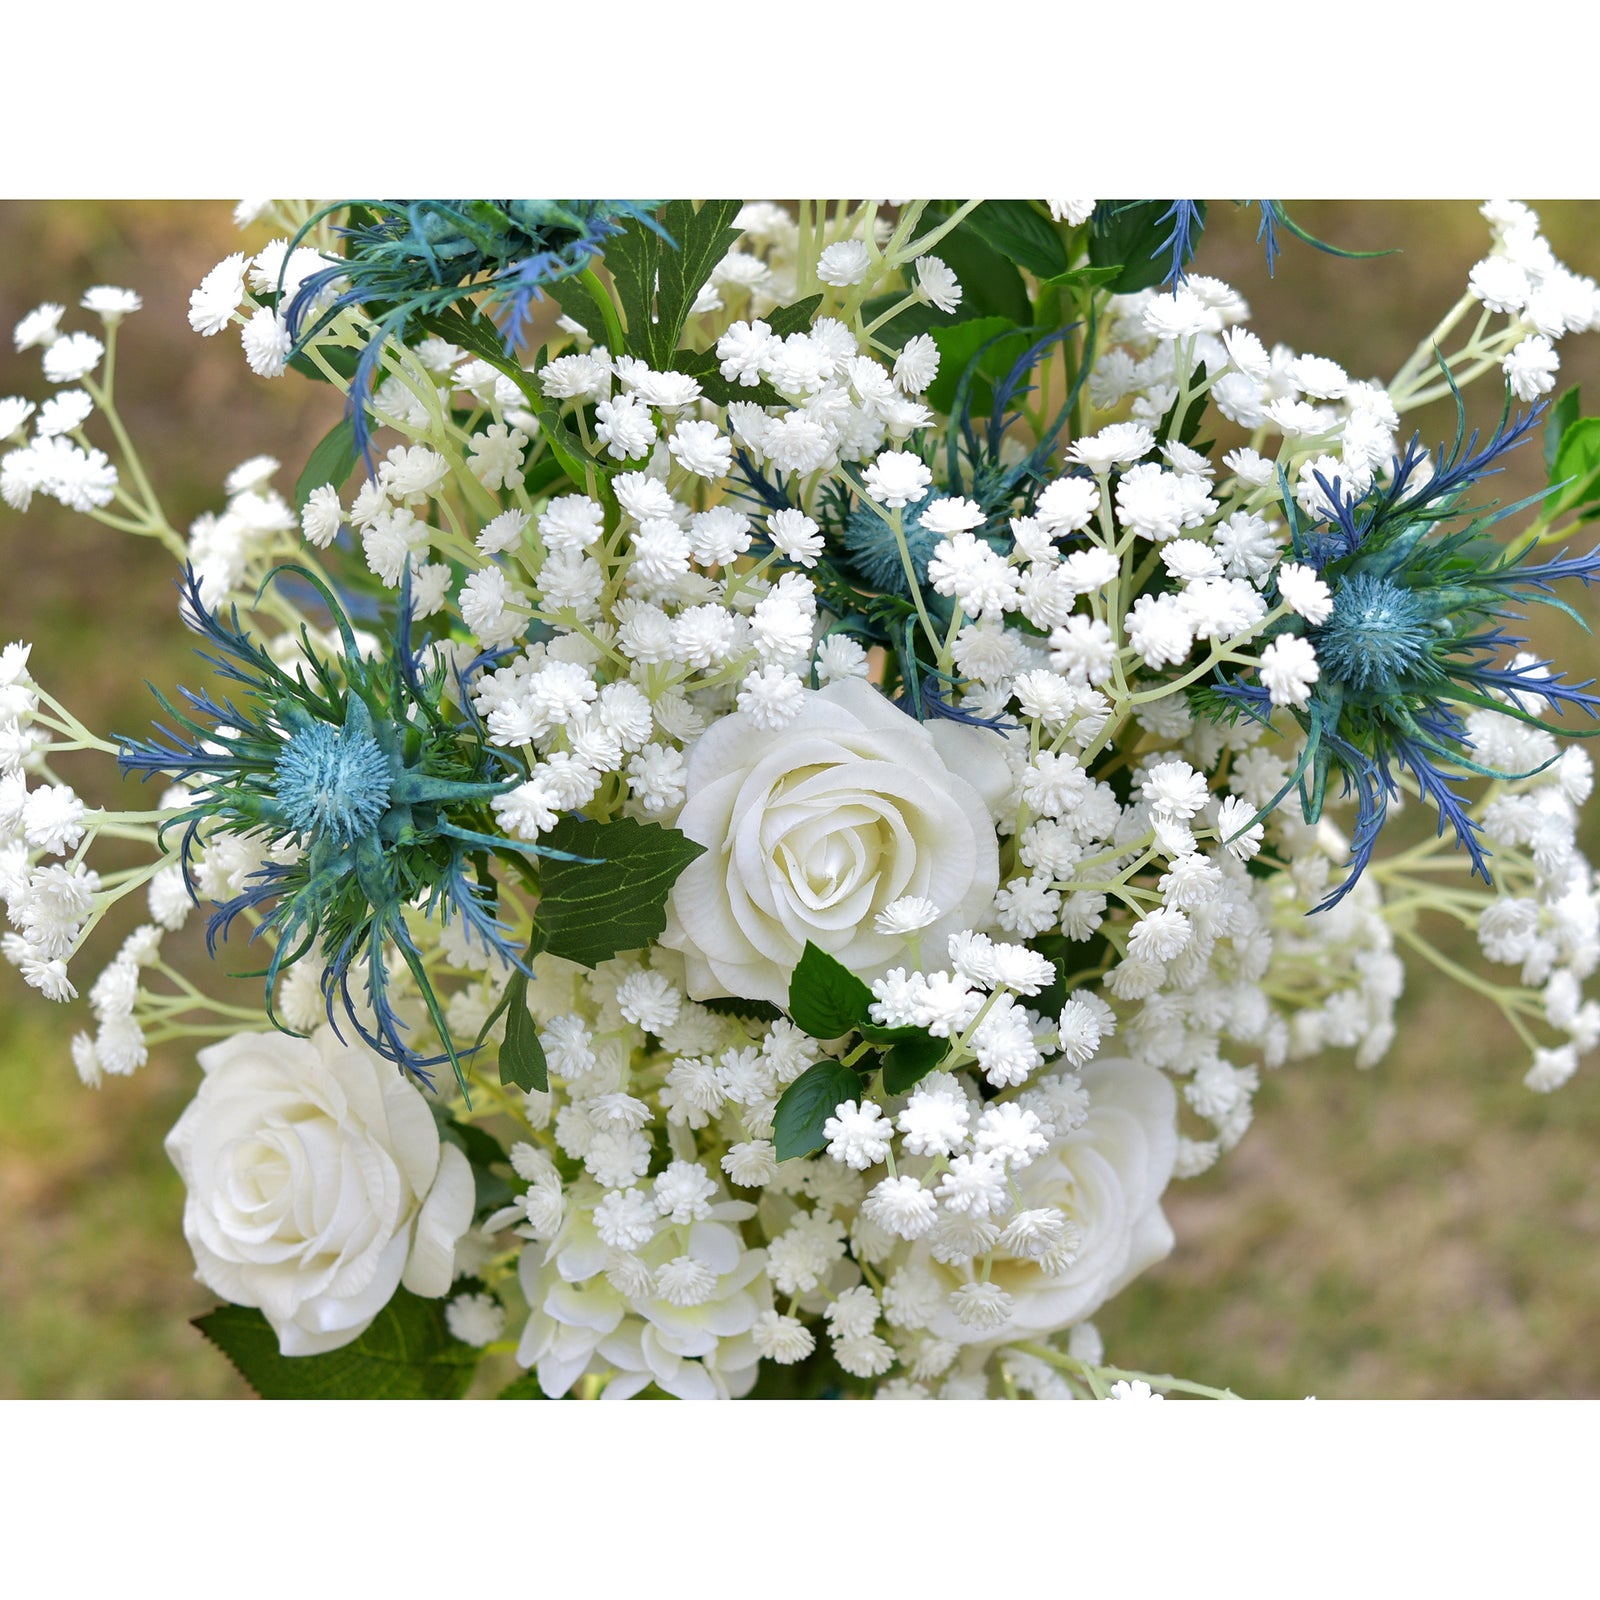 FiveSeasonStuff Baby's Breath Artificial Flowers 10 Baby's Breath Gypsophila 2 ft Tall Long Stems for Floral Arrangement, Wedding Flower Bouquet Décor (Vintage White)